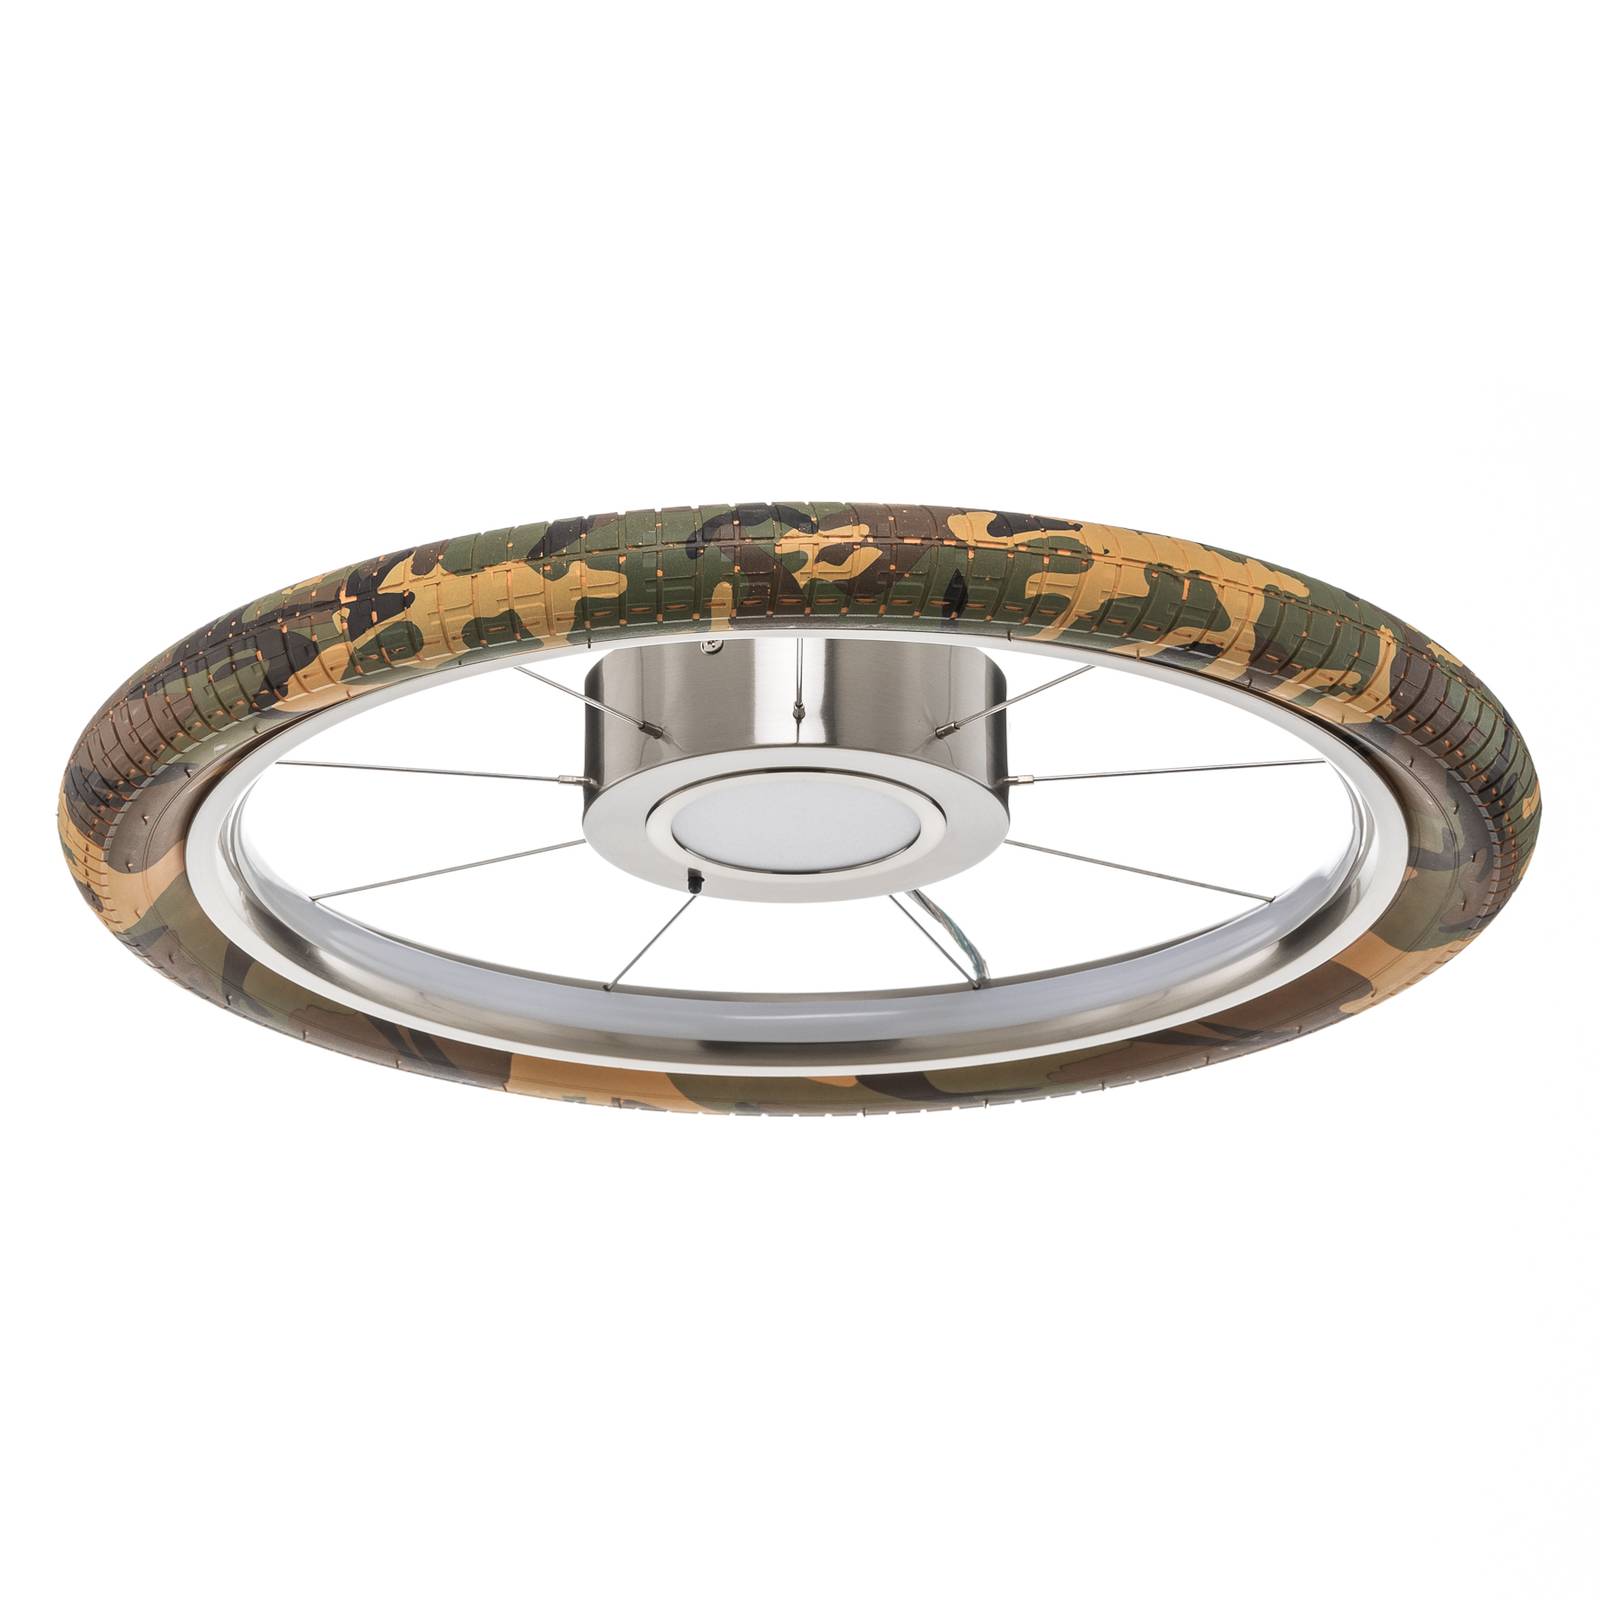 Evotec LED-Deckenleuchte Wheel, RGB, camouflage